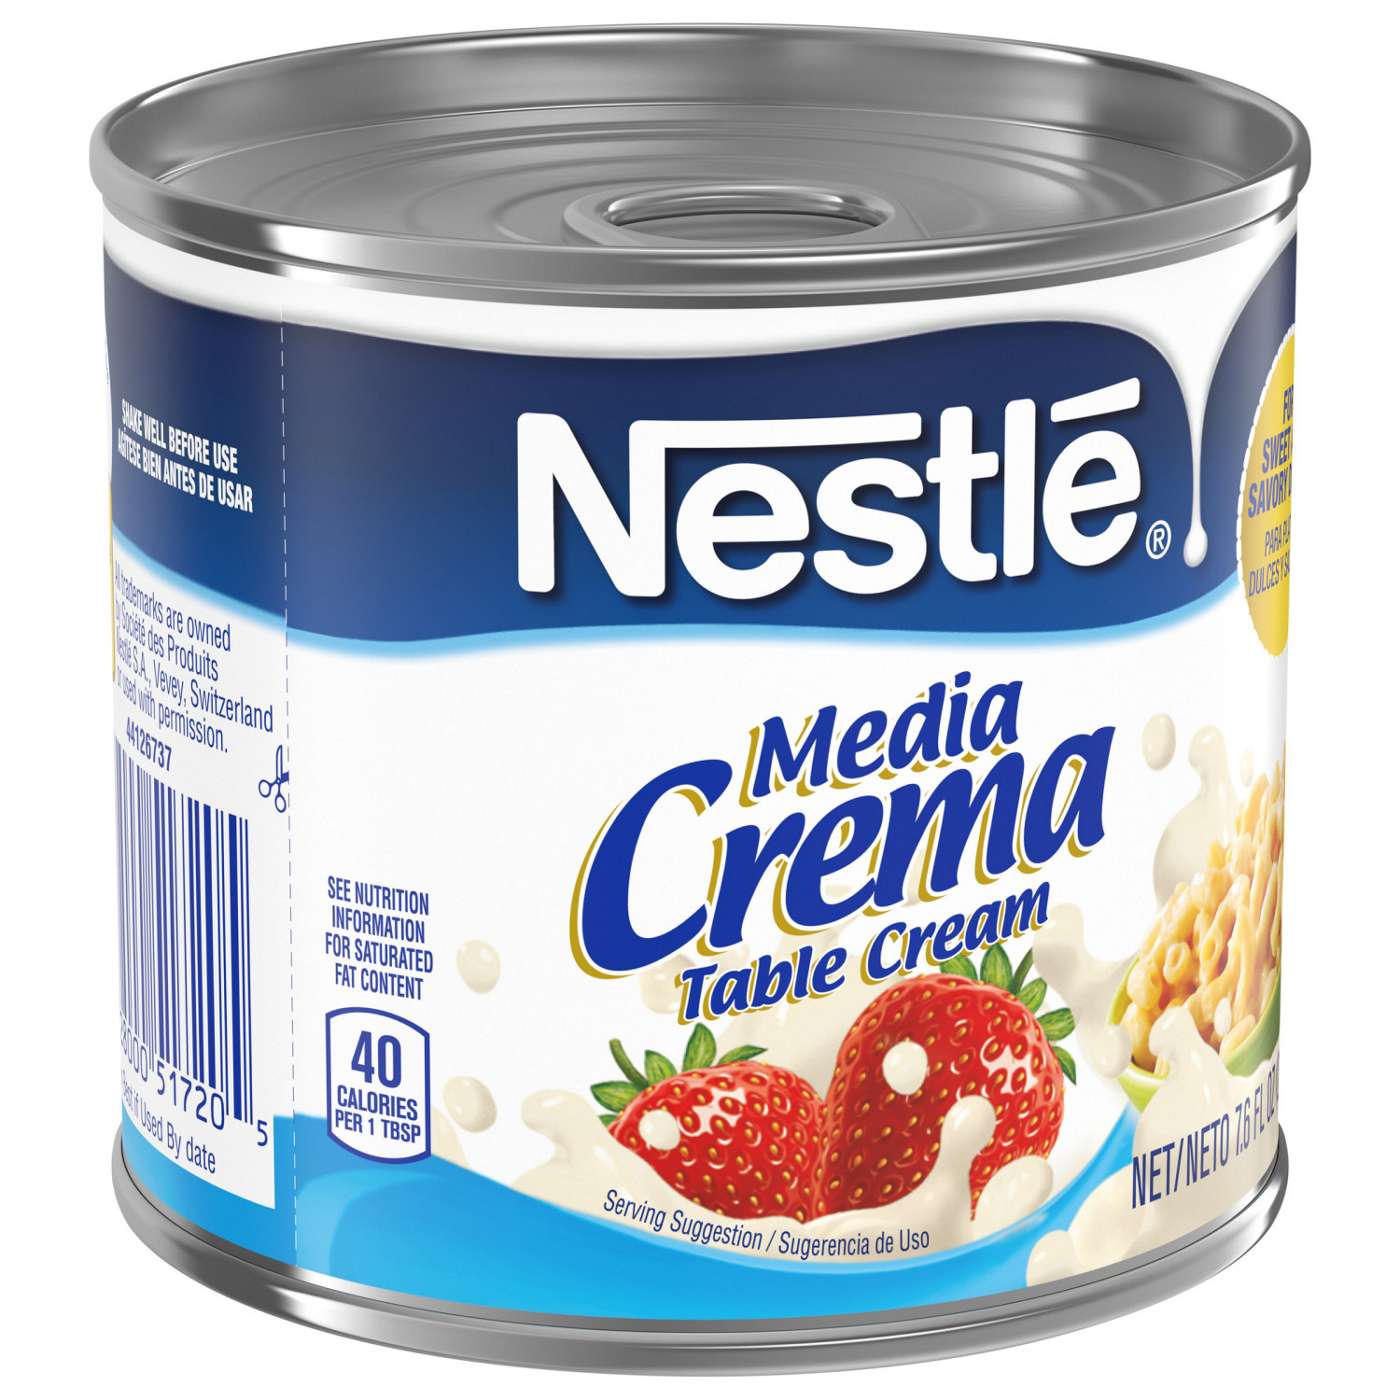 Nestle Media Crema Table Cream; image 7 of 8